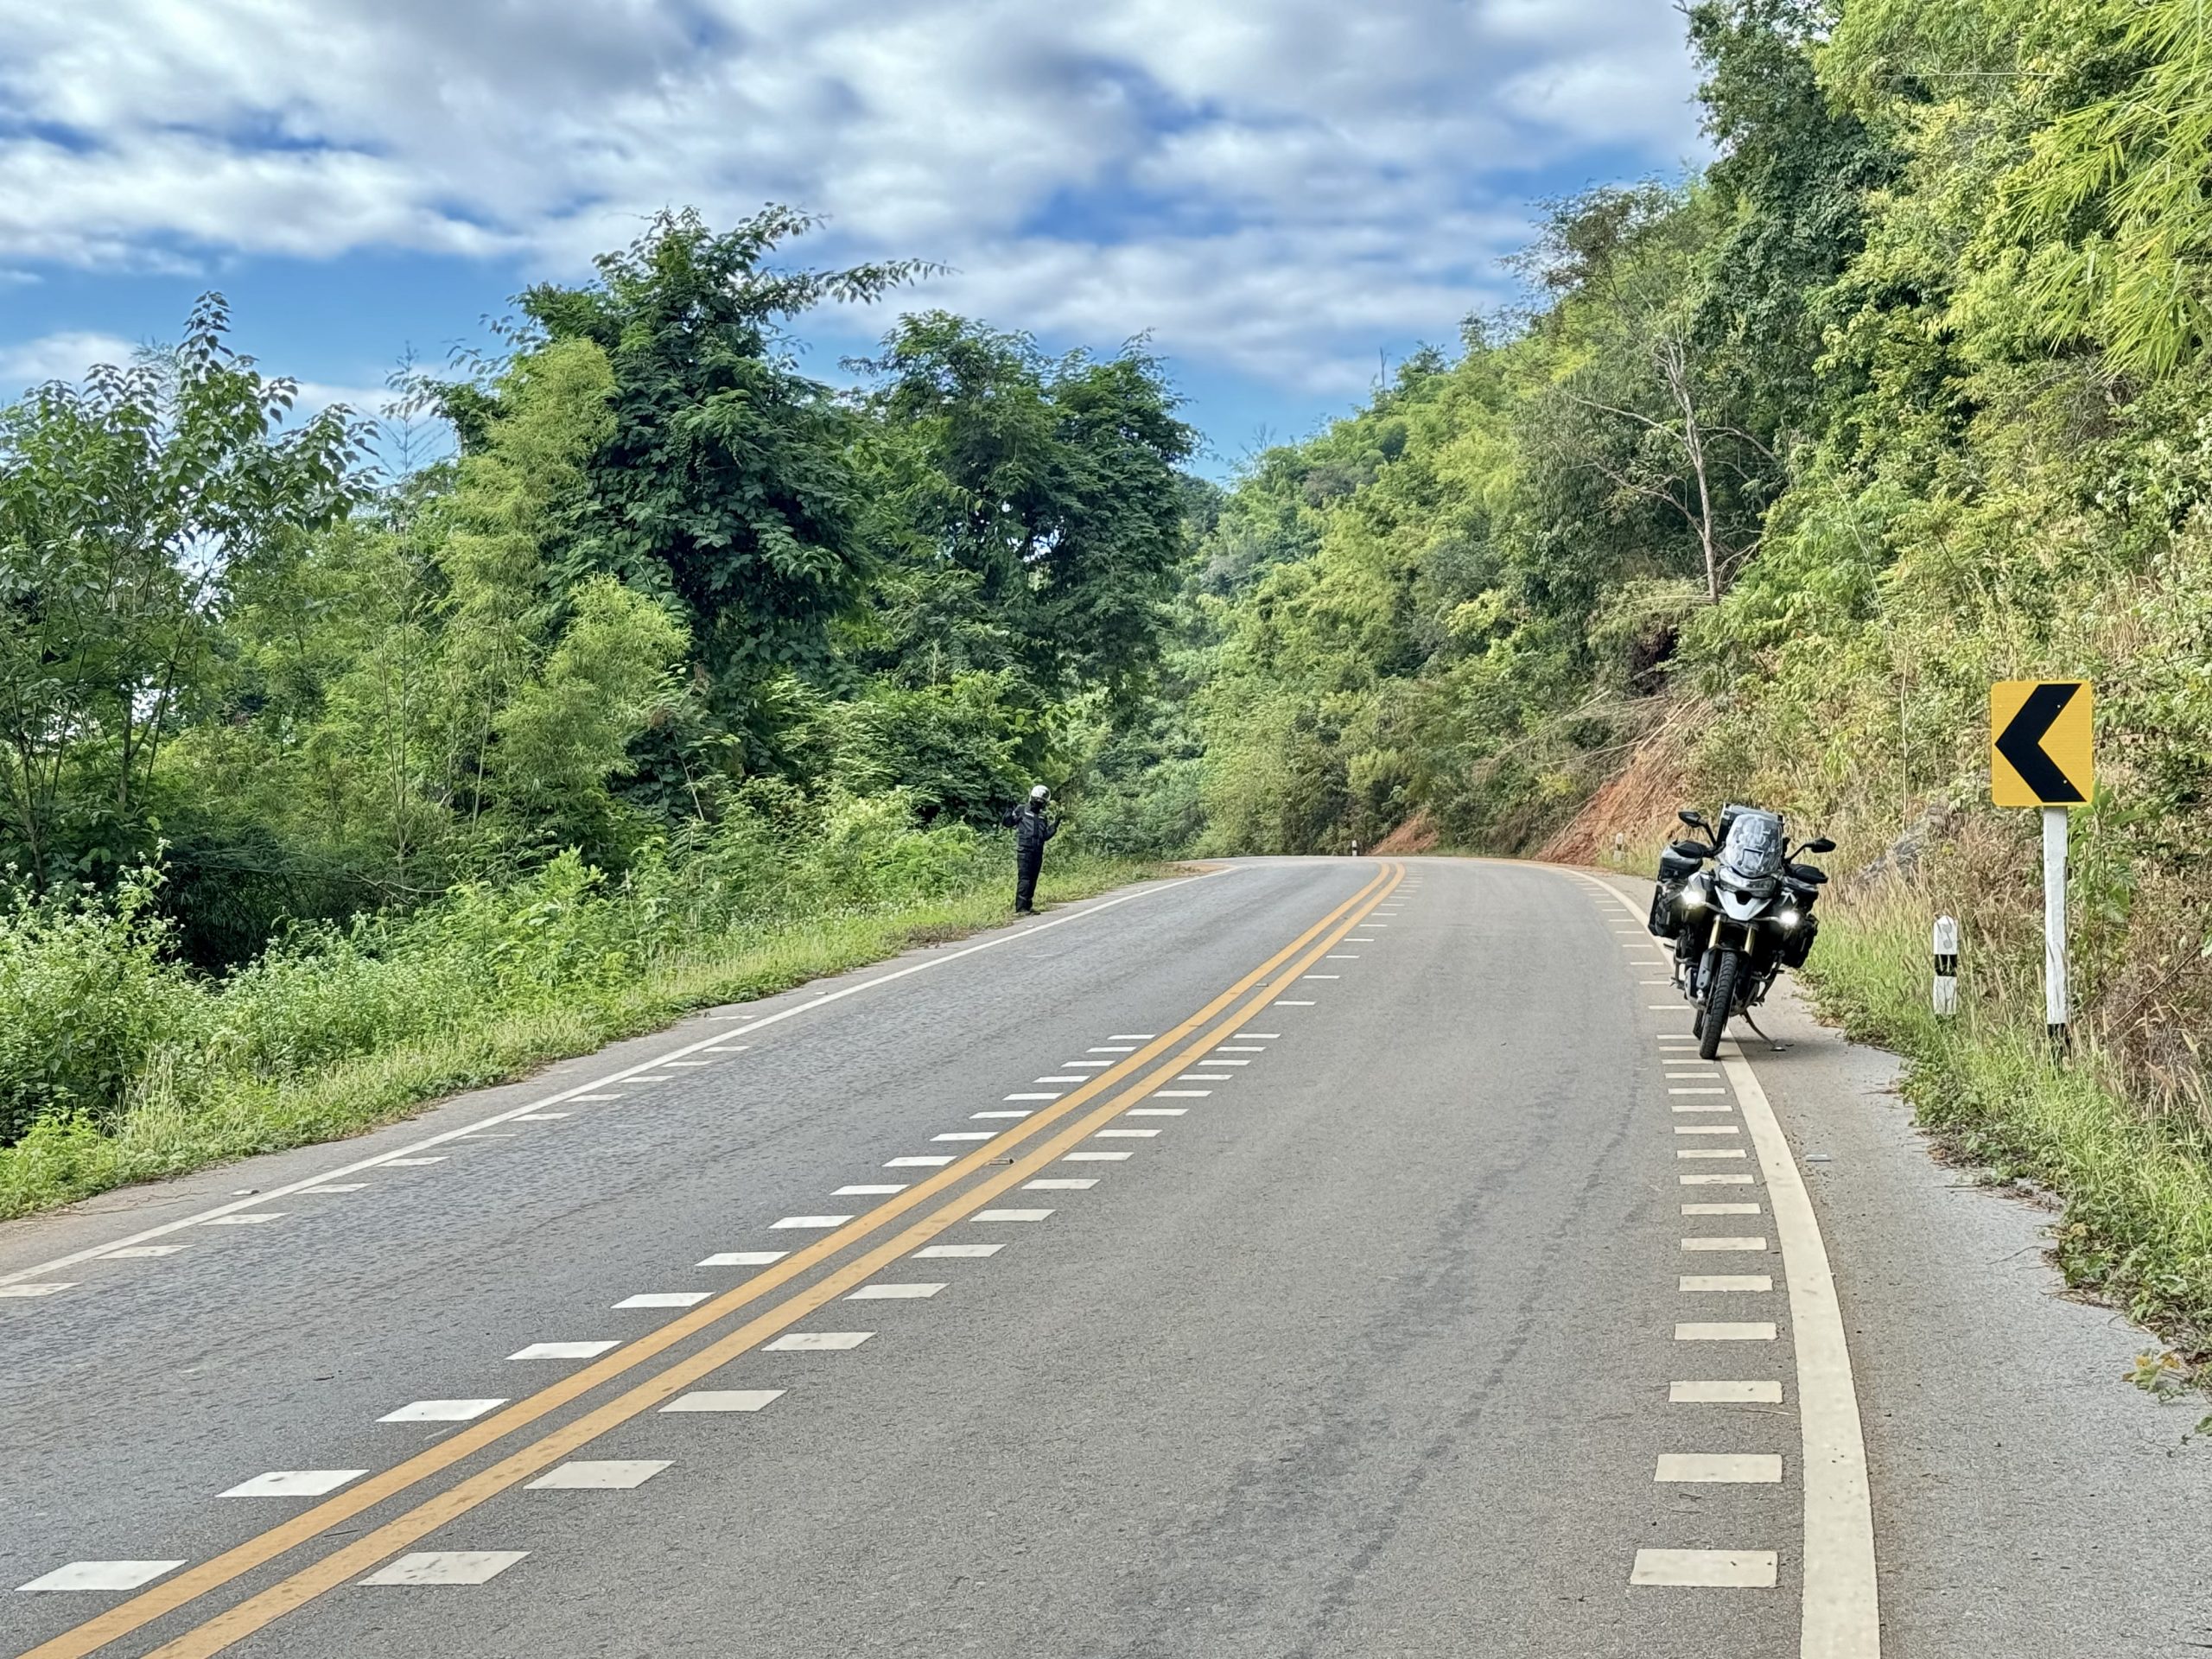 Rural road in Thailand